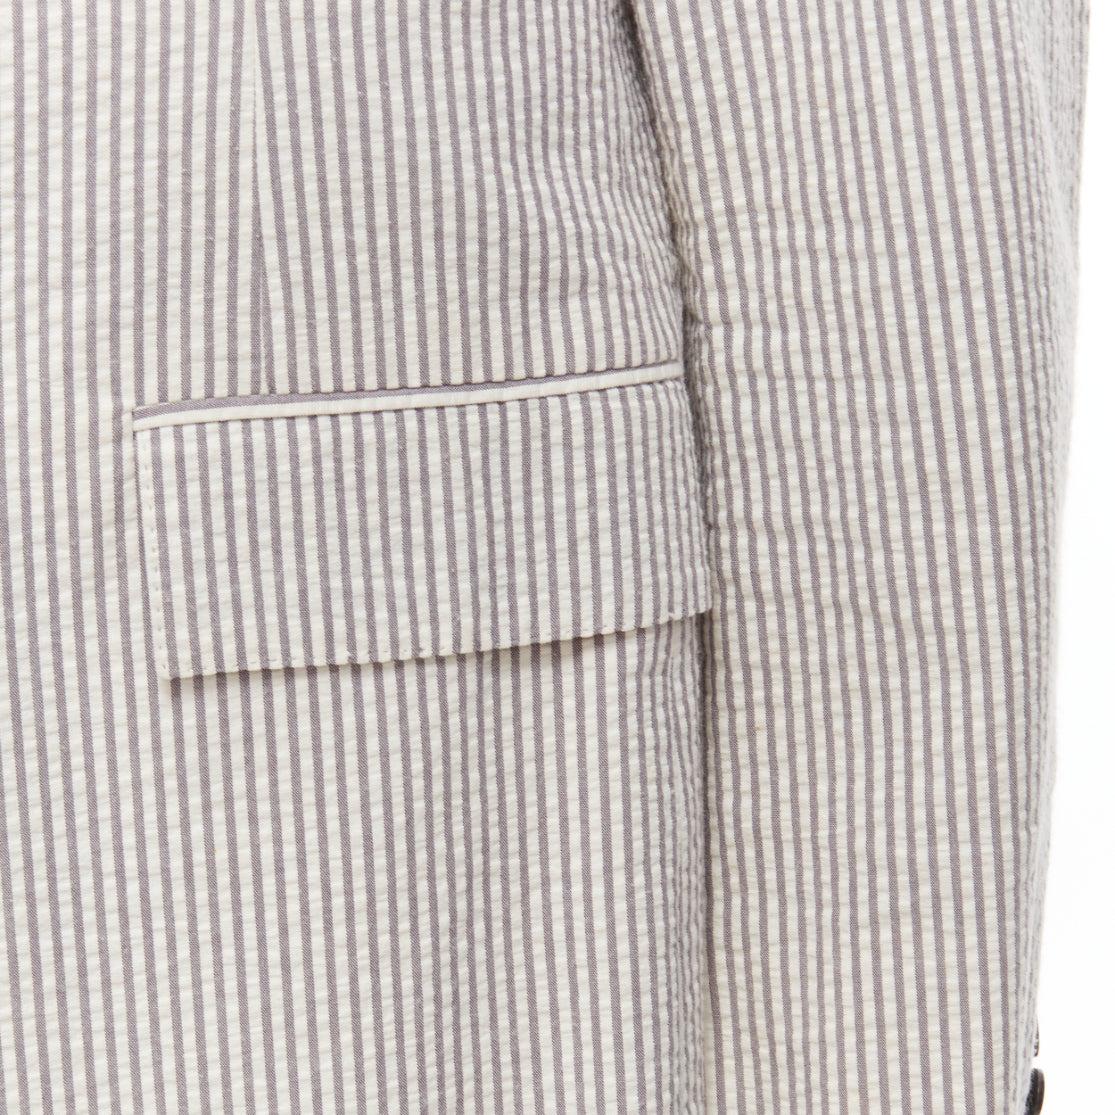 THOM BROWNE grey white striped seersucker blazer jacket shorts suit Sz. 3 L For Sale 4